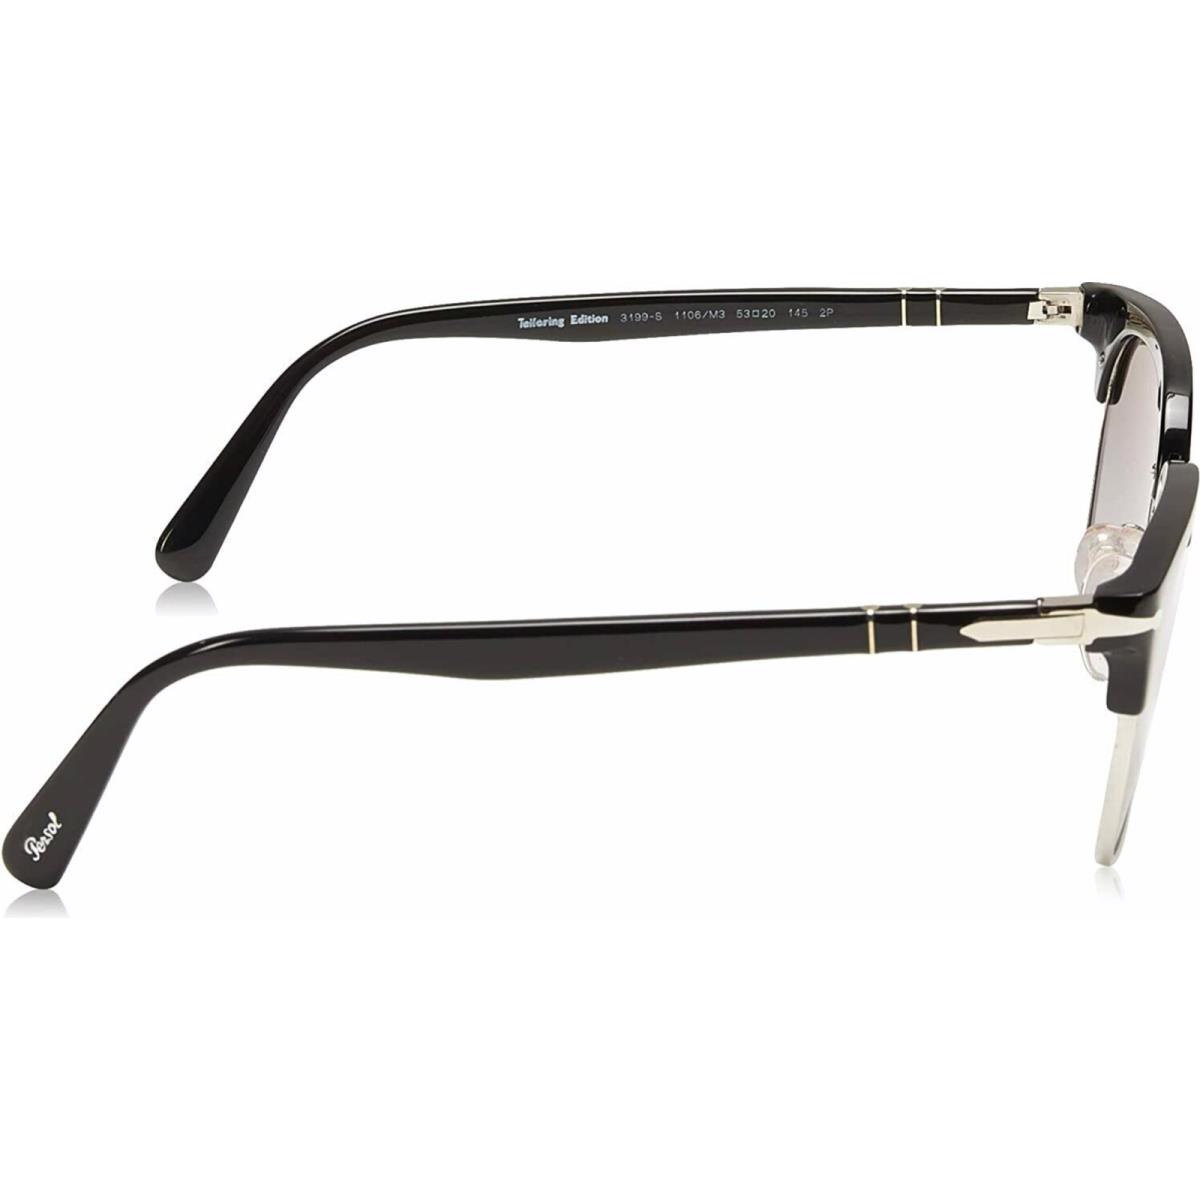 Persol sunglasses  - Black , Black & Silver Frame, Grey Gradient Polarized Lens